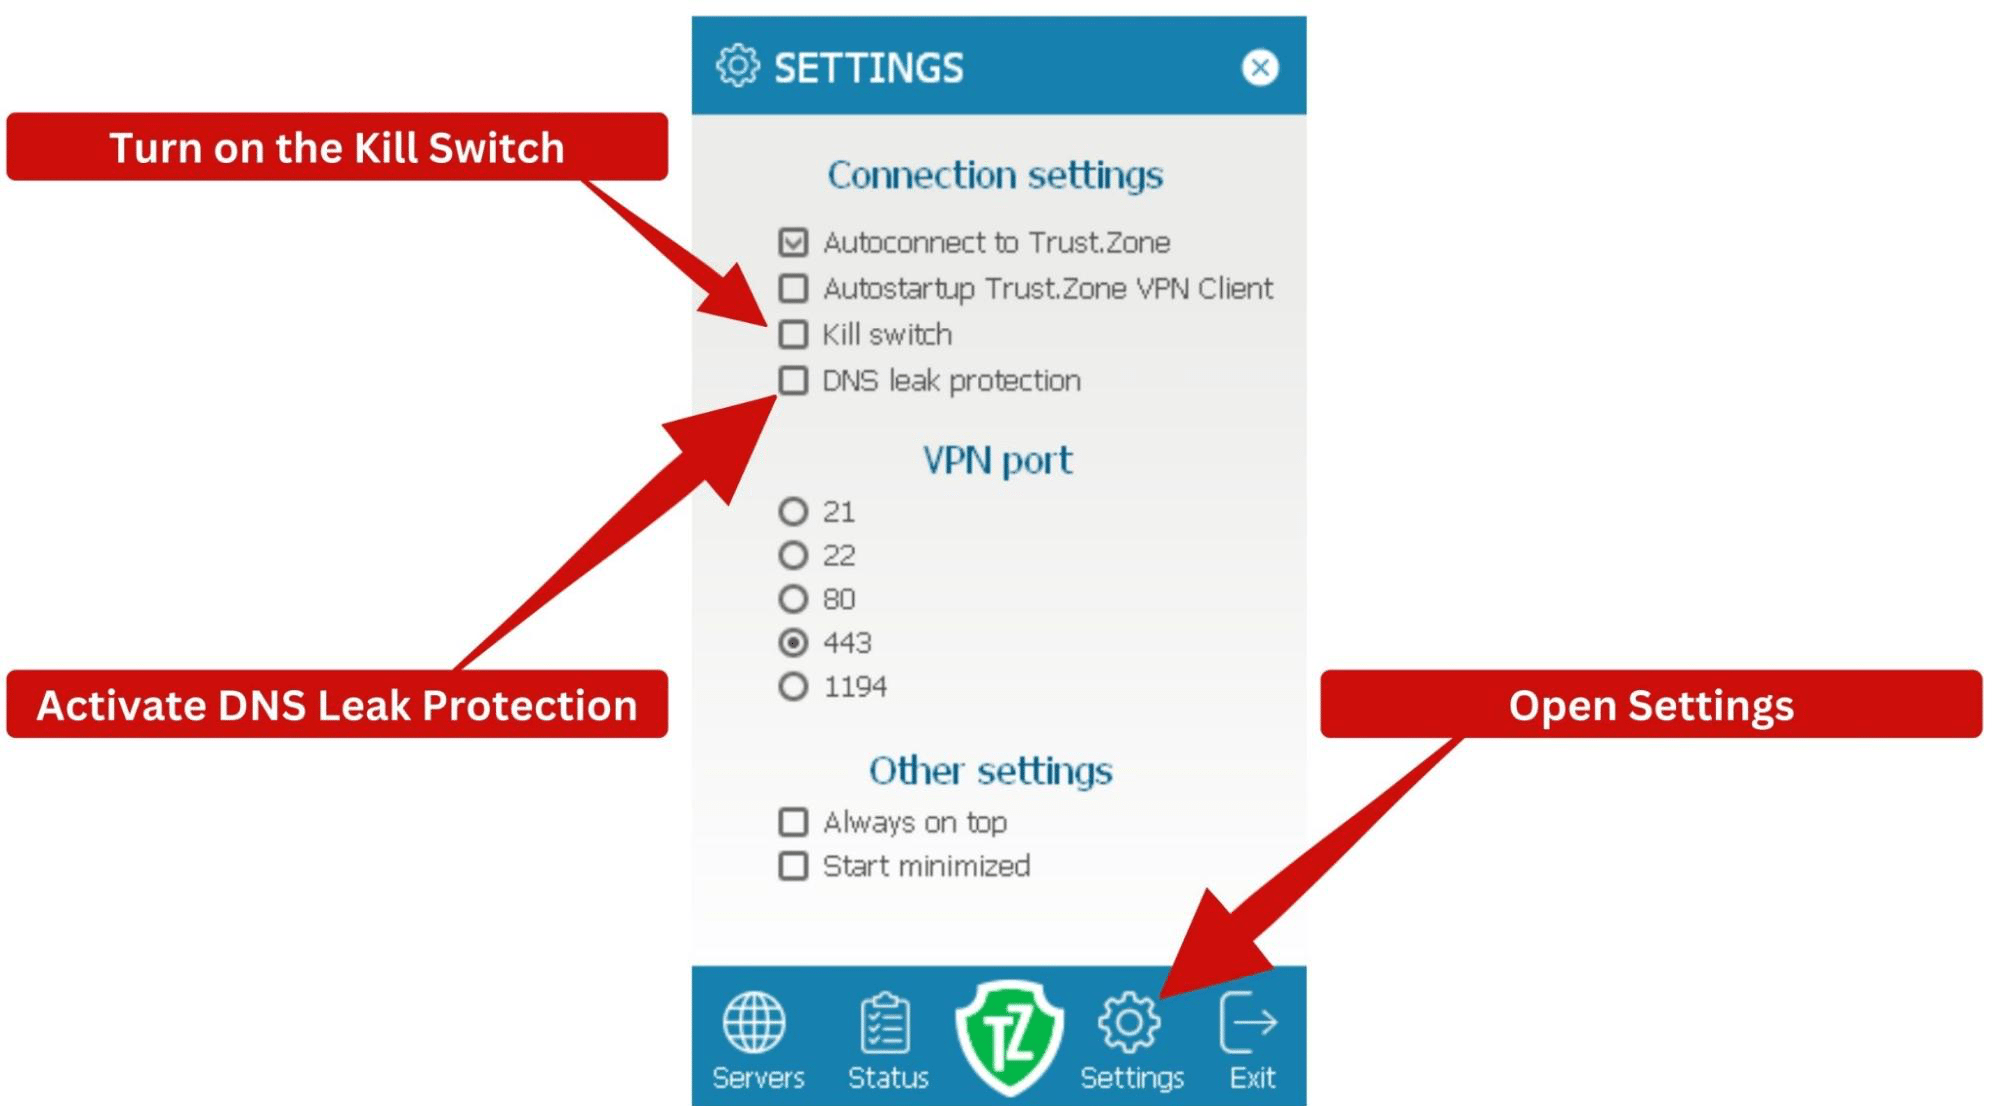 Trust.Zone VPN Connection Settings on a Windows app